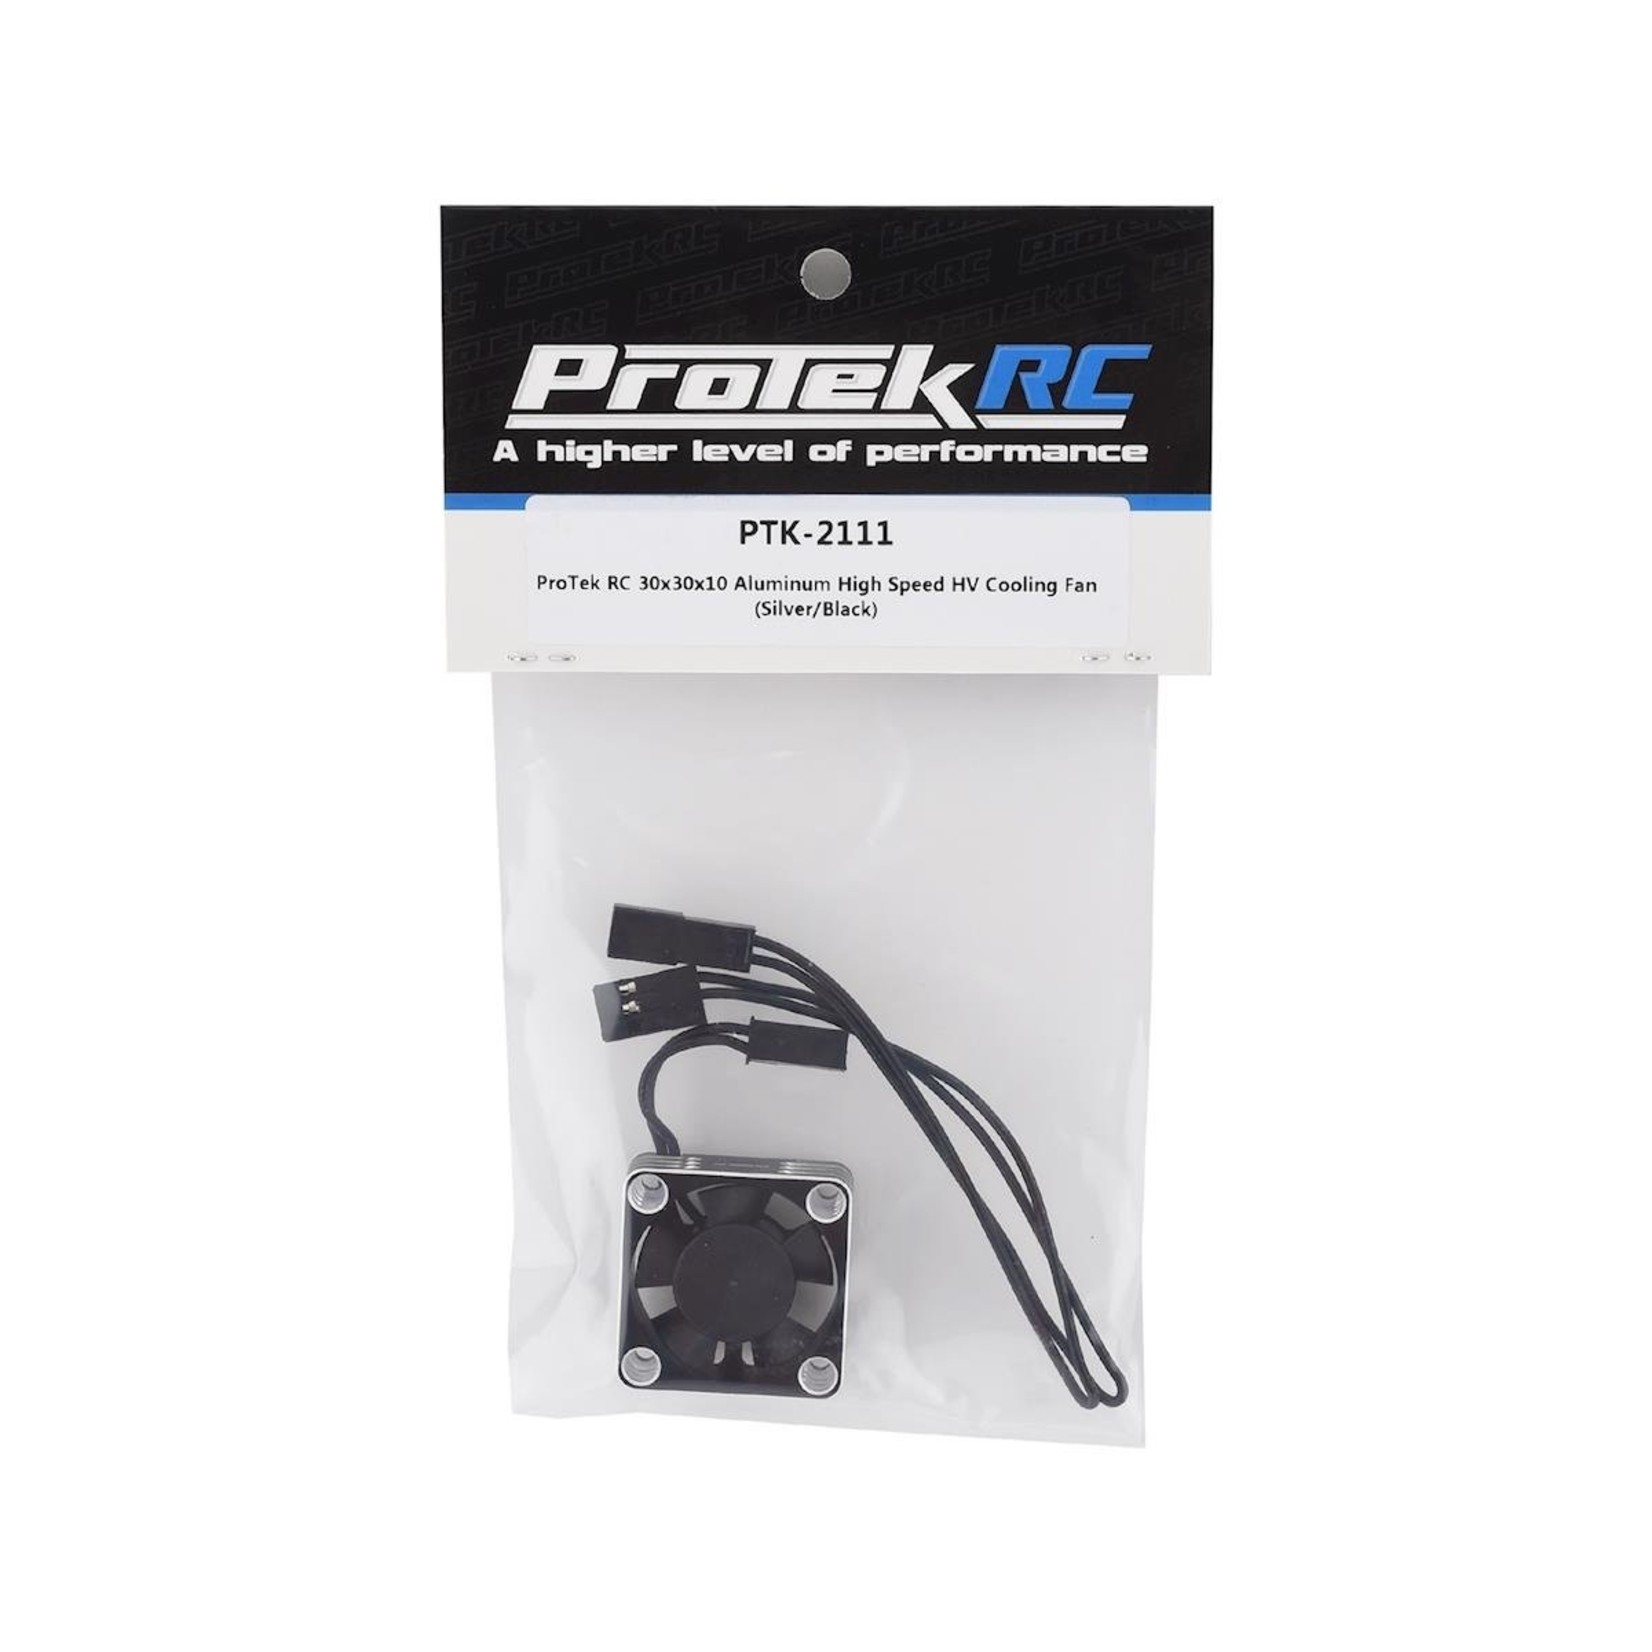 Protek R/C PTK-2111  30x30x10mm Aluminum High Speed HV Cooling Fan (Silver/Black)